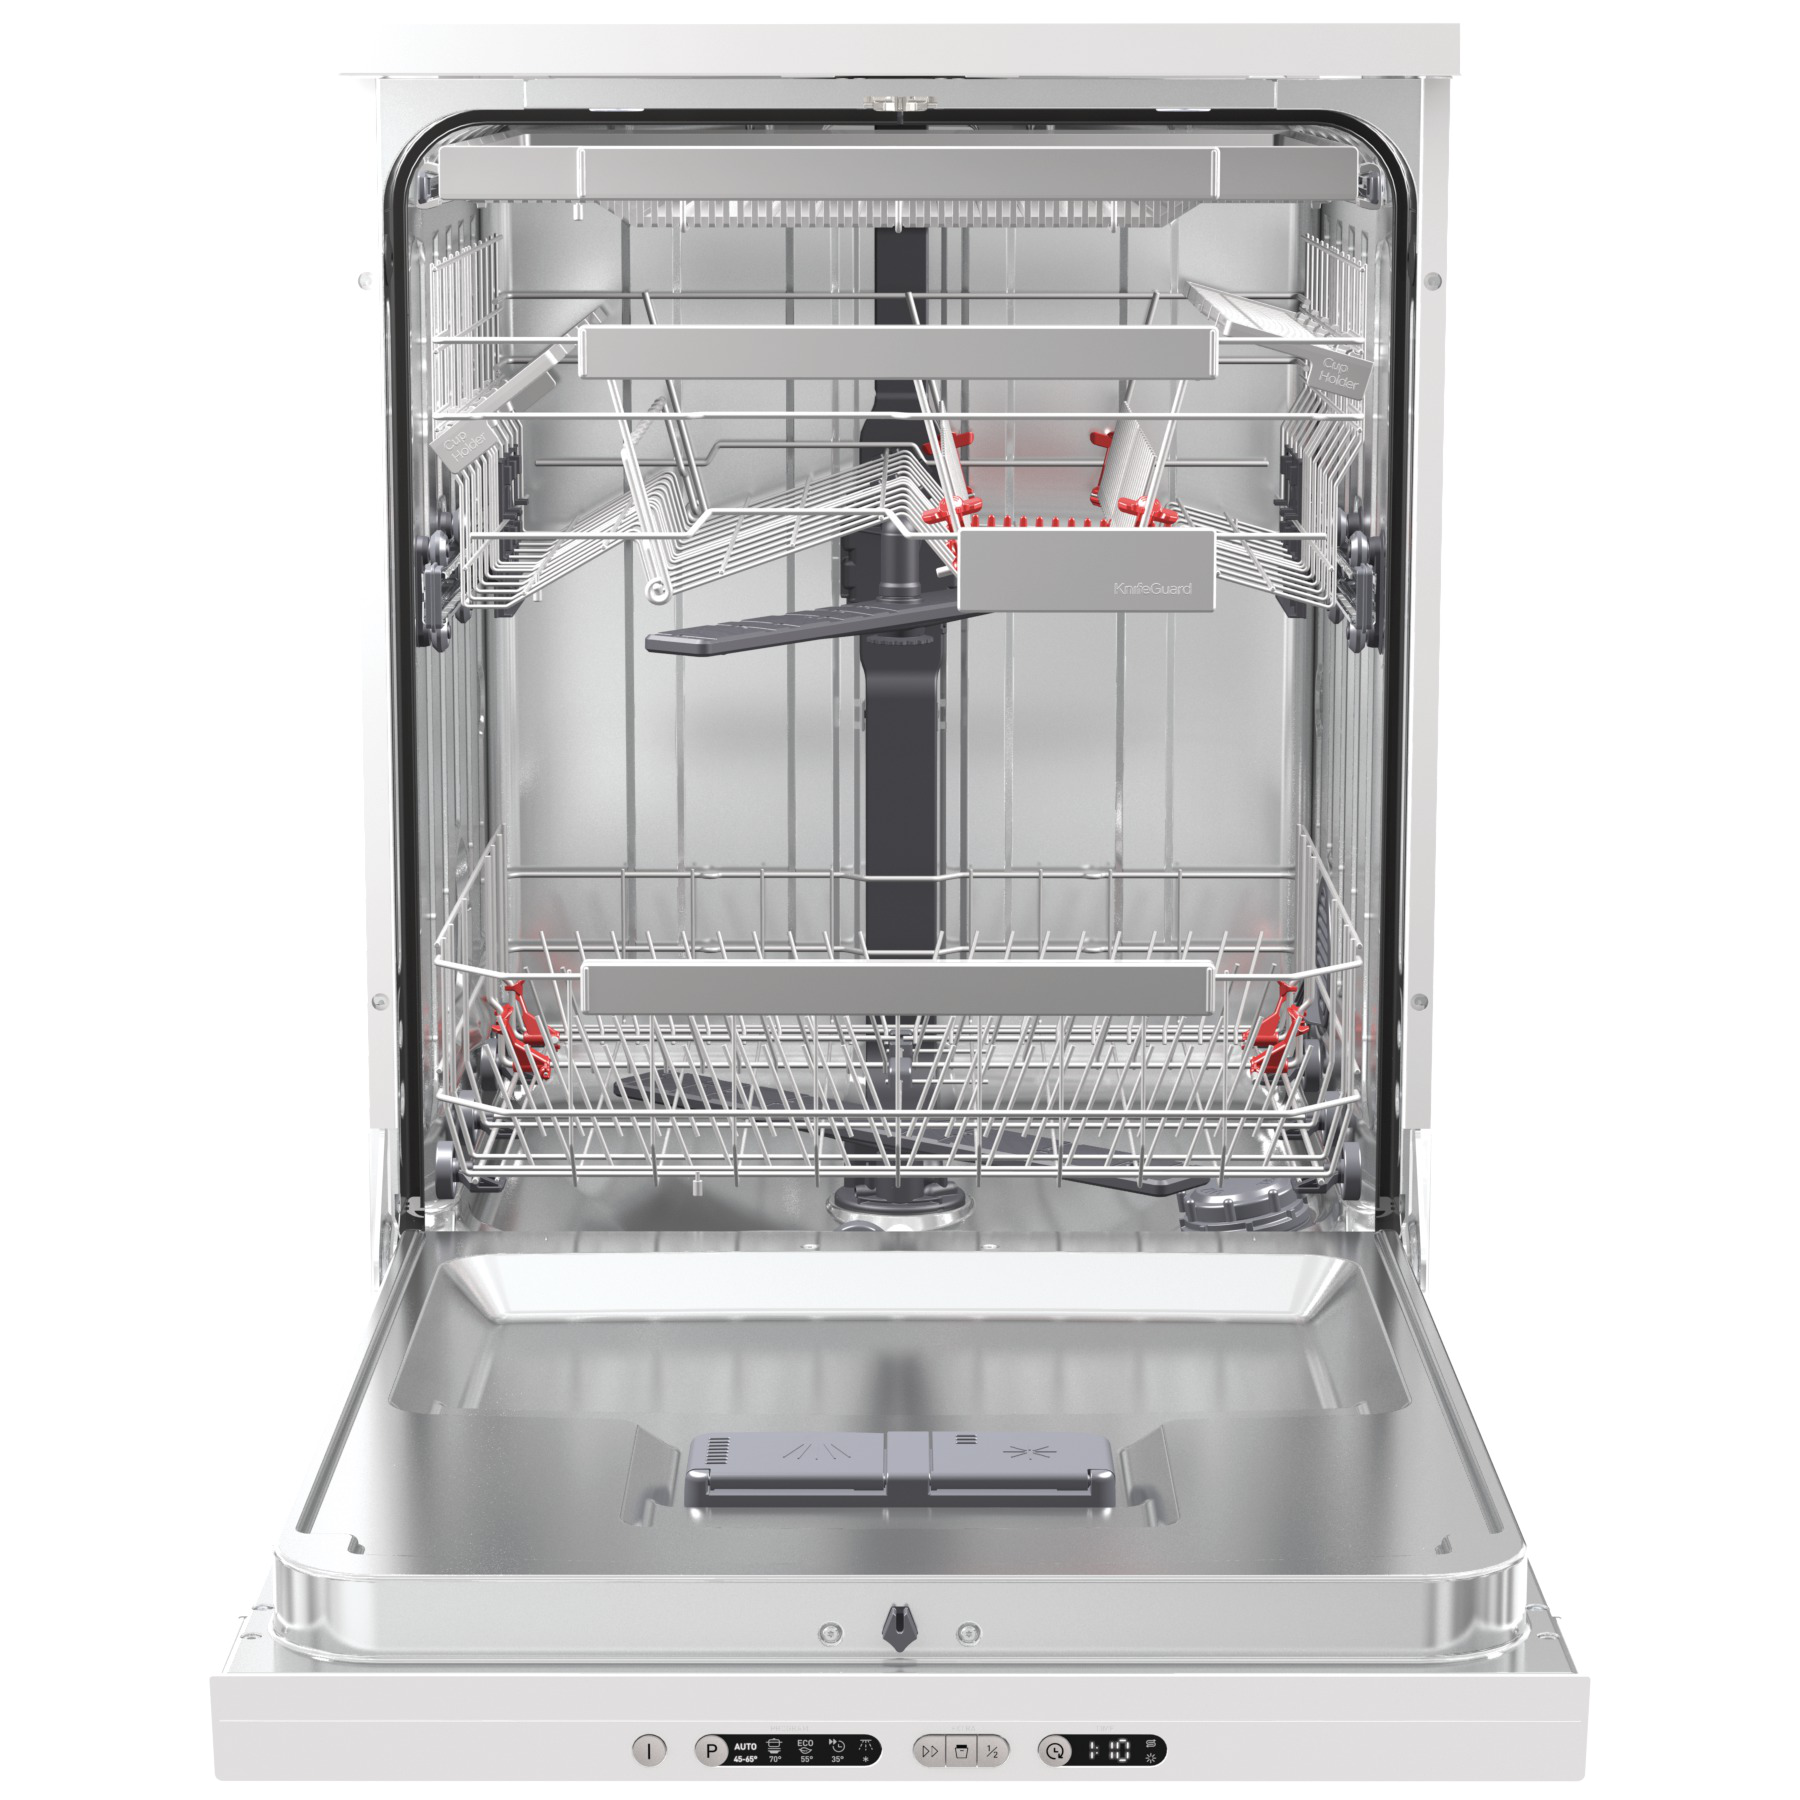 Hisense HS6130W Dishwasher